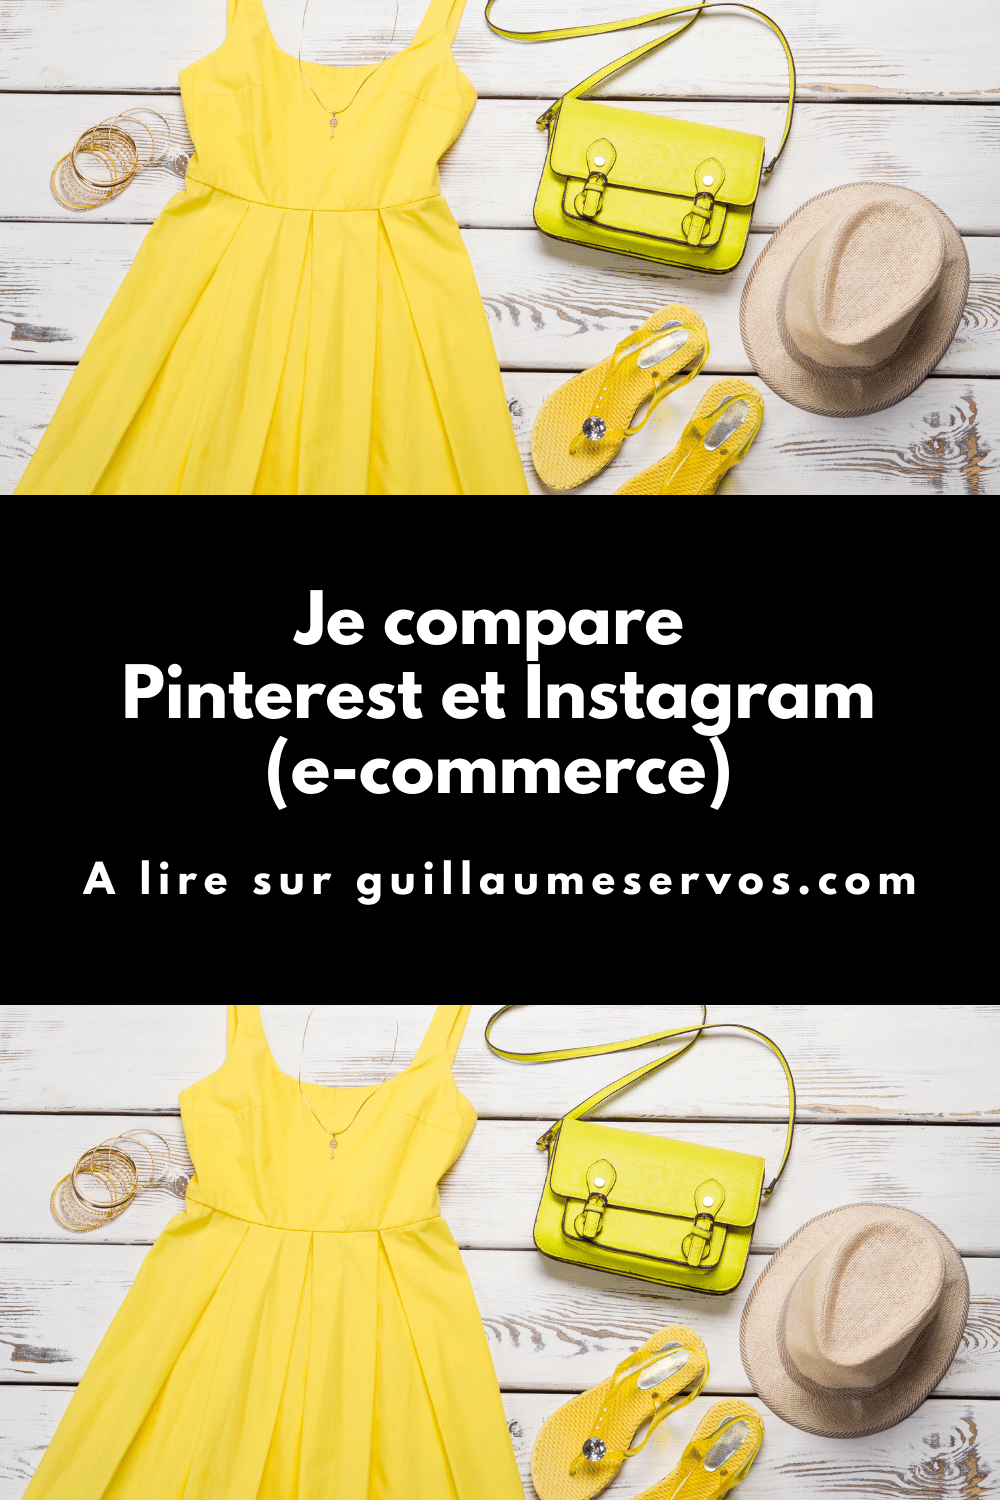 Je compare Pinterest et Instagram (e-commerce)